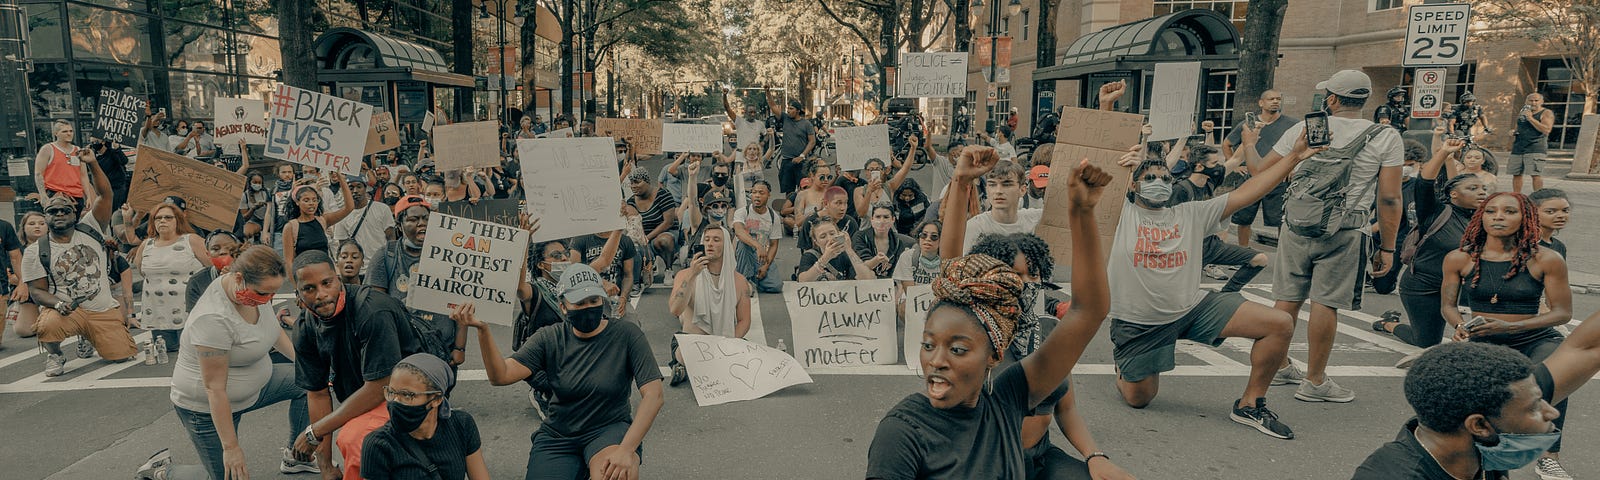 Black Lives Matter help to end depictions of police brutality